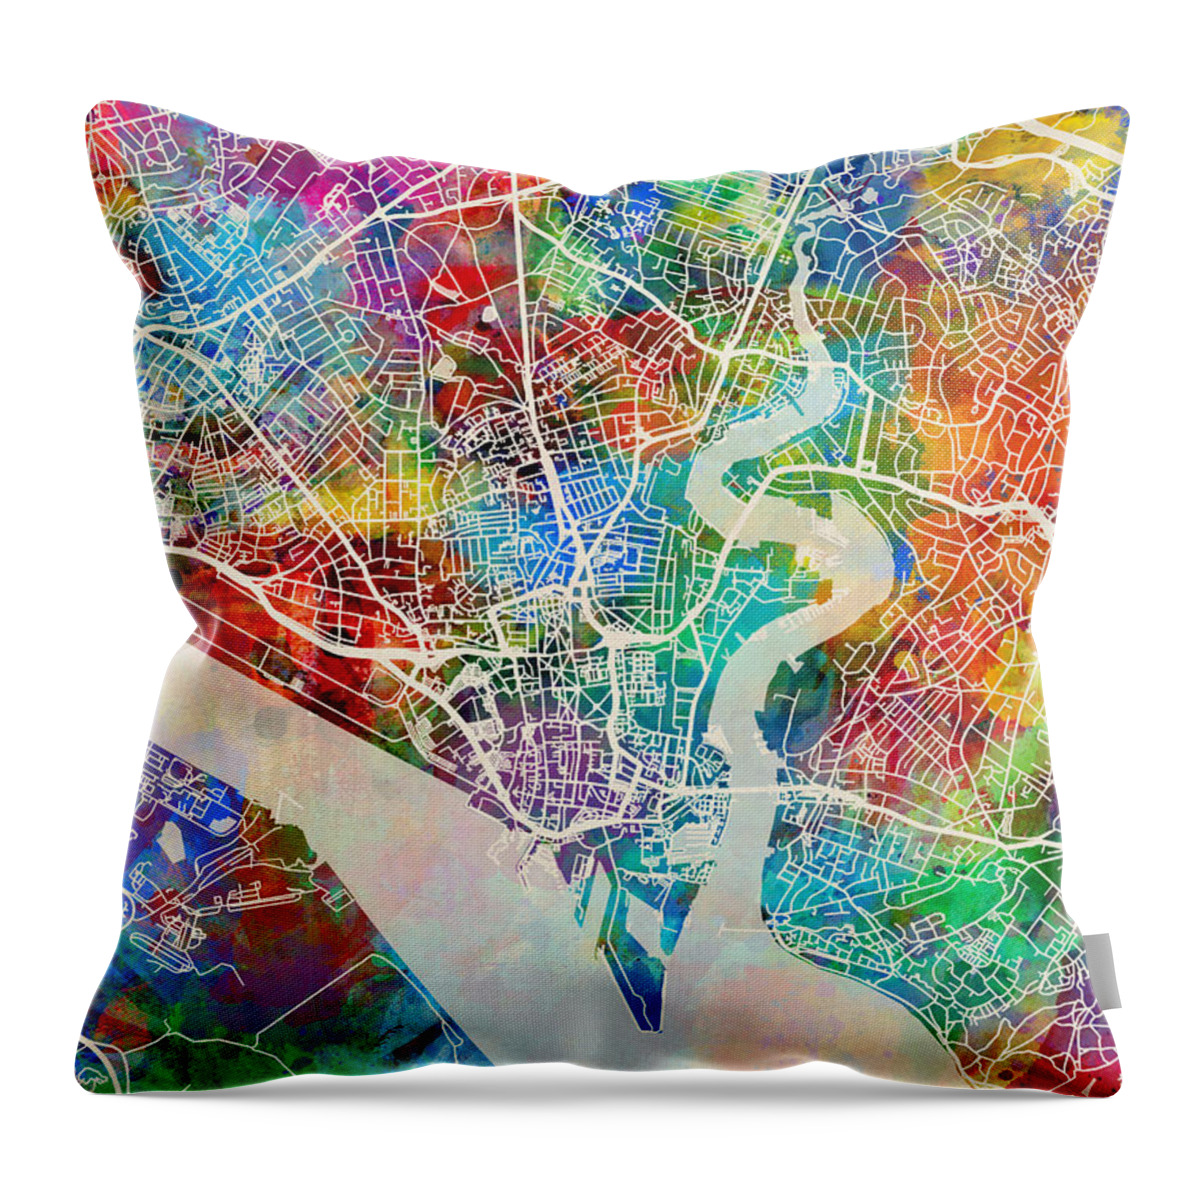 Southampton Throw Pillow featuring the digital art Southampton England City Map by Michael Tompsett